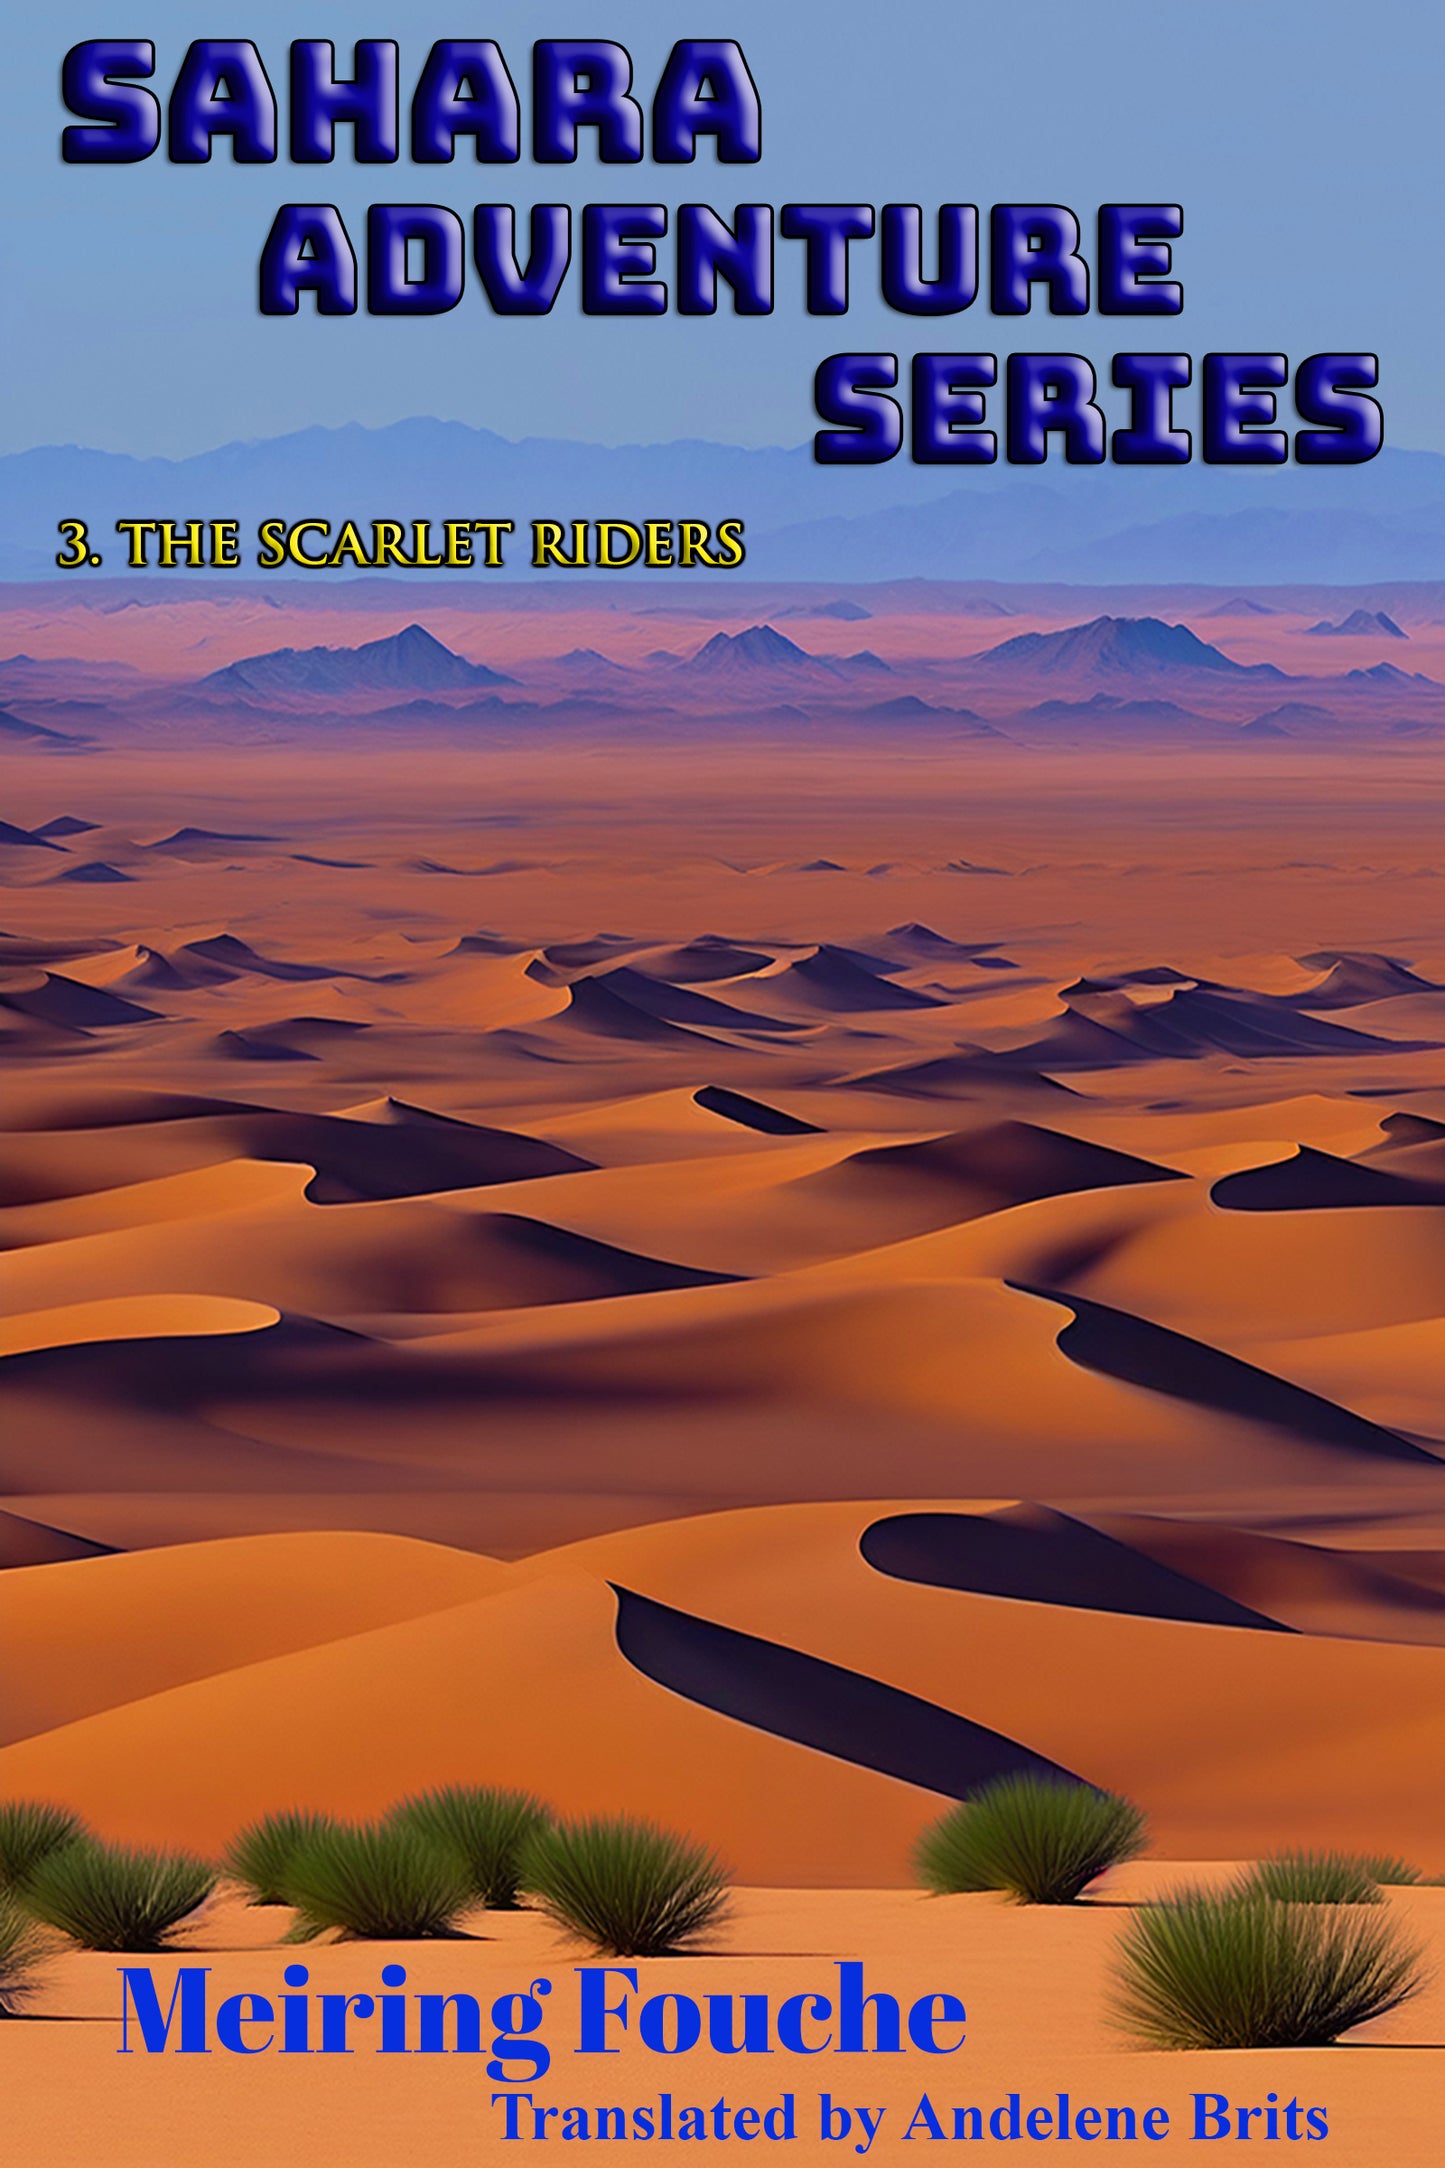 3. Sahara Adventure Series - The Scarlet Riders